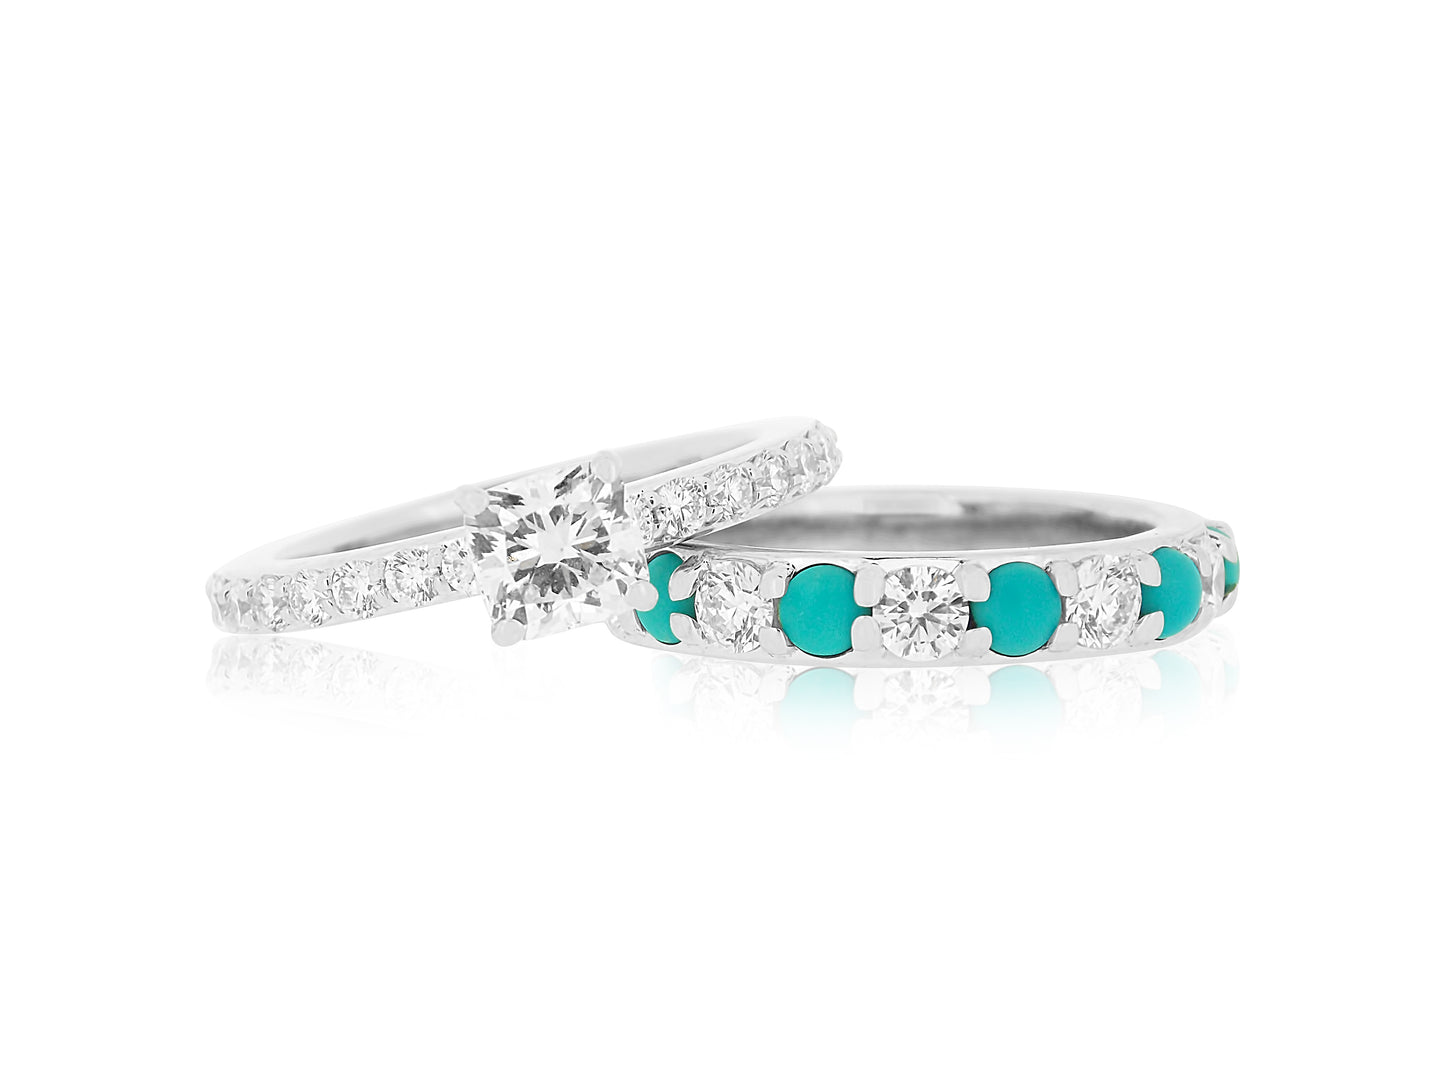 Turquoise and Diamond Engagement Ring Set